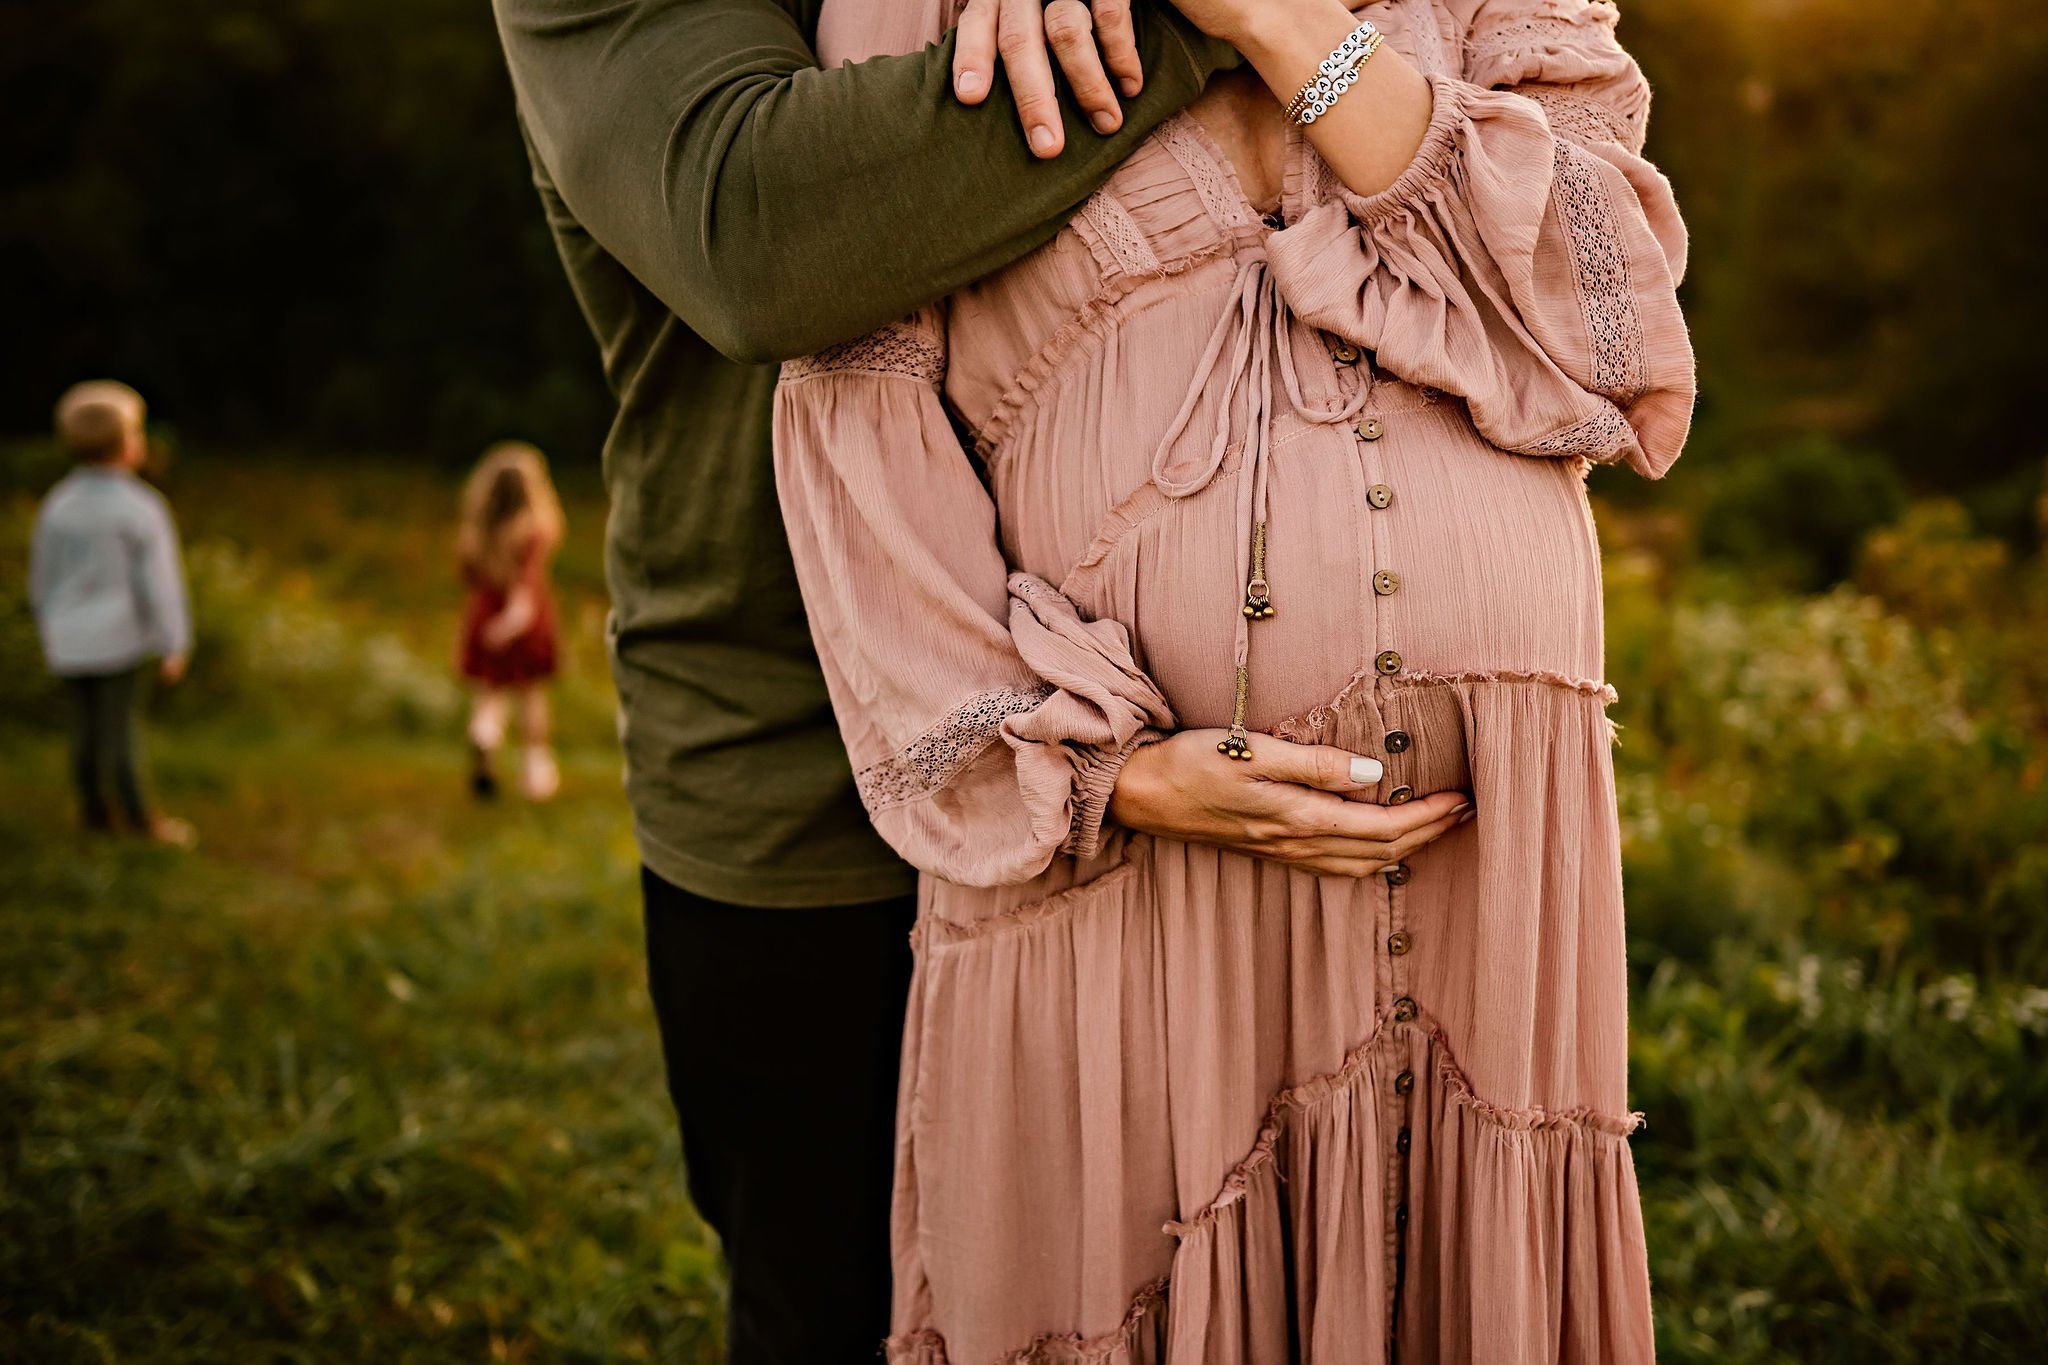 akron-ohio-maternity-family-outdoor-session-lauren-grayson44.jpeg